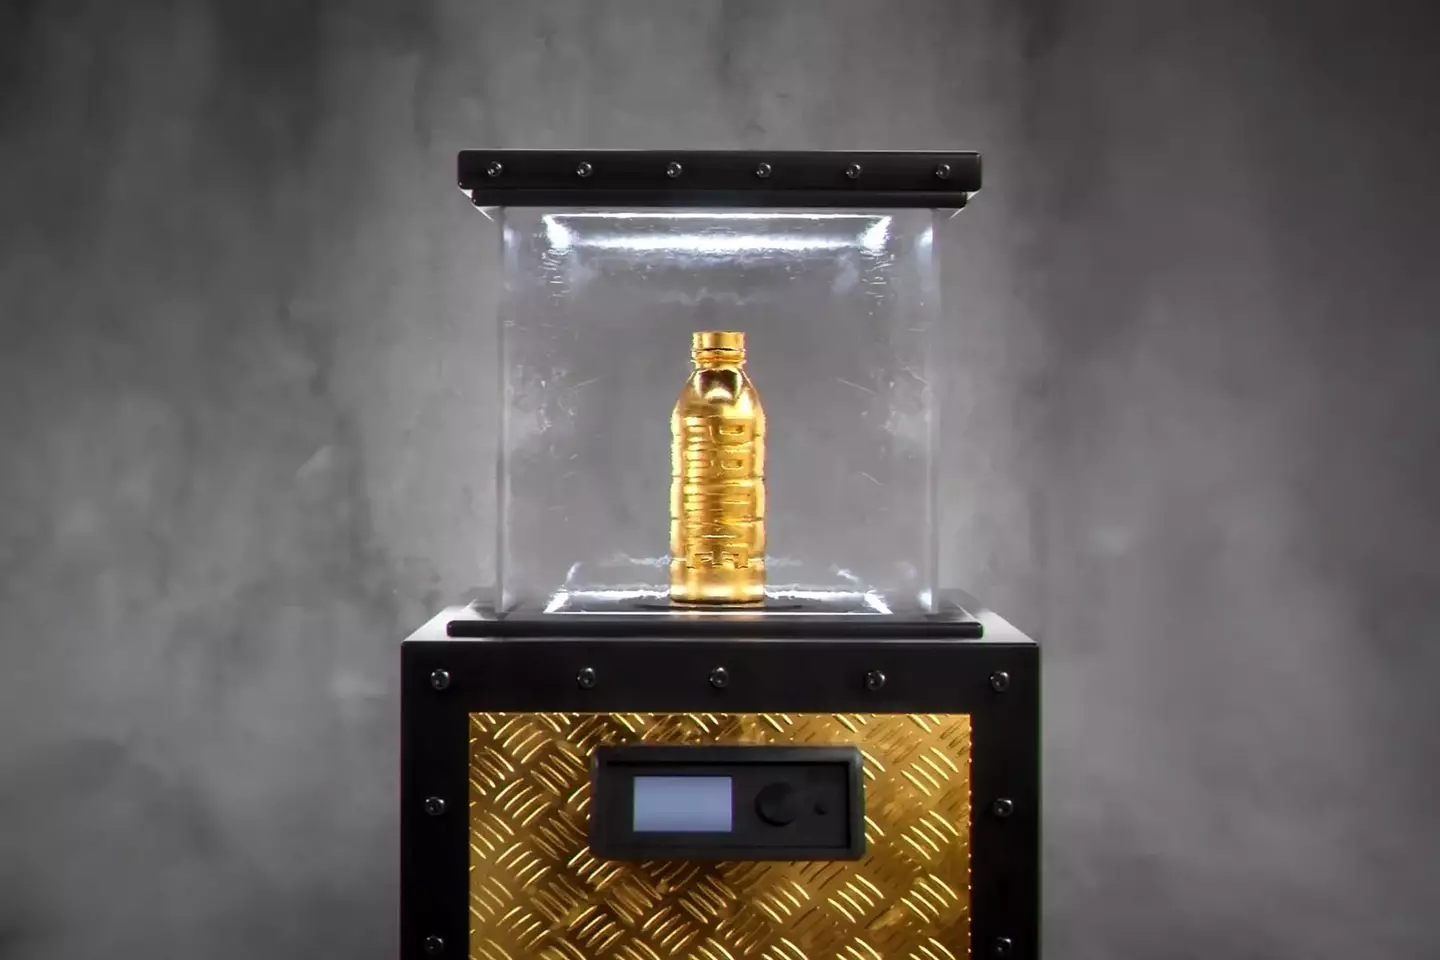 The golden PRIME bottle on display. (Image